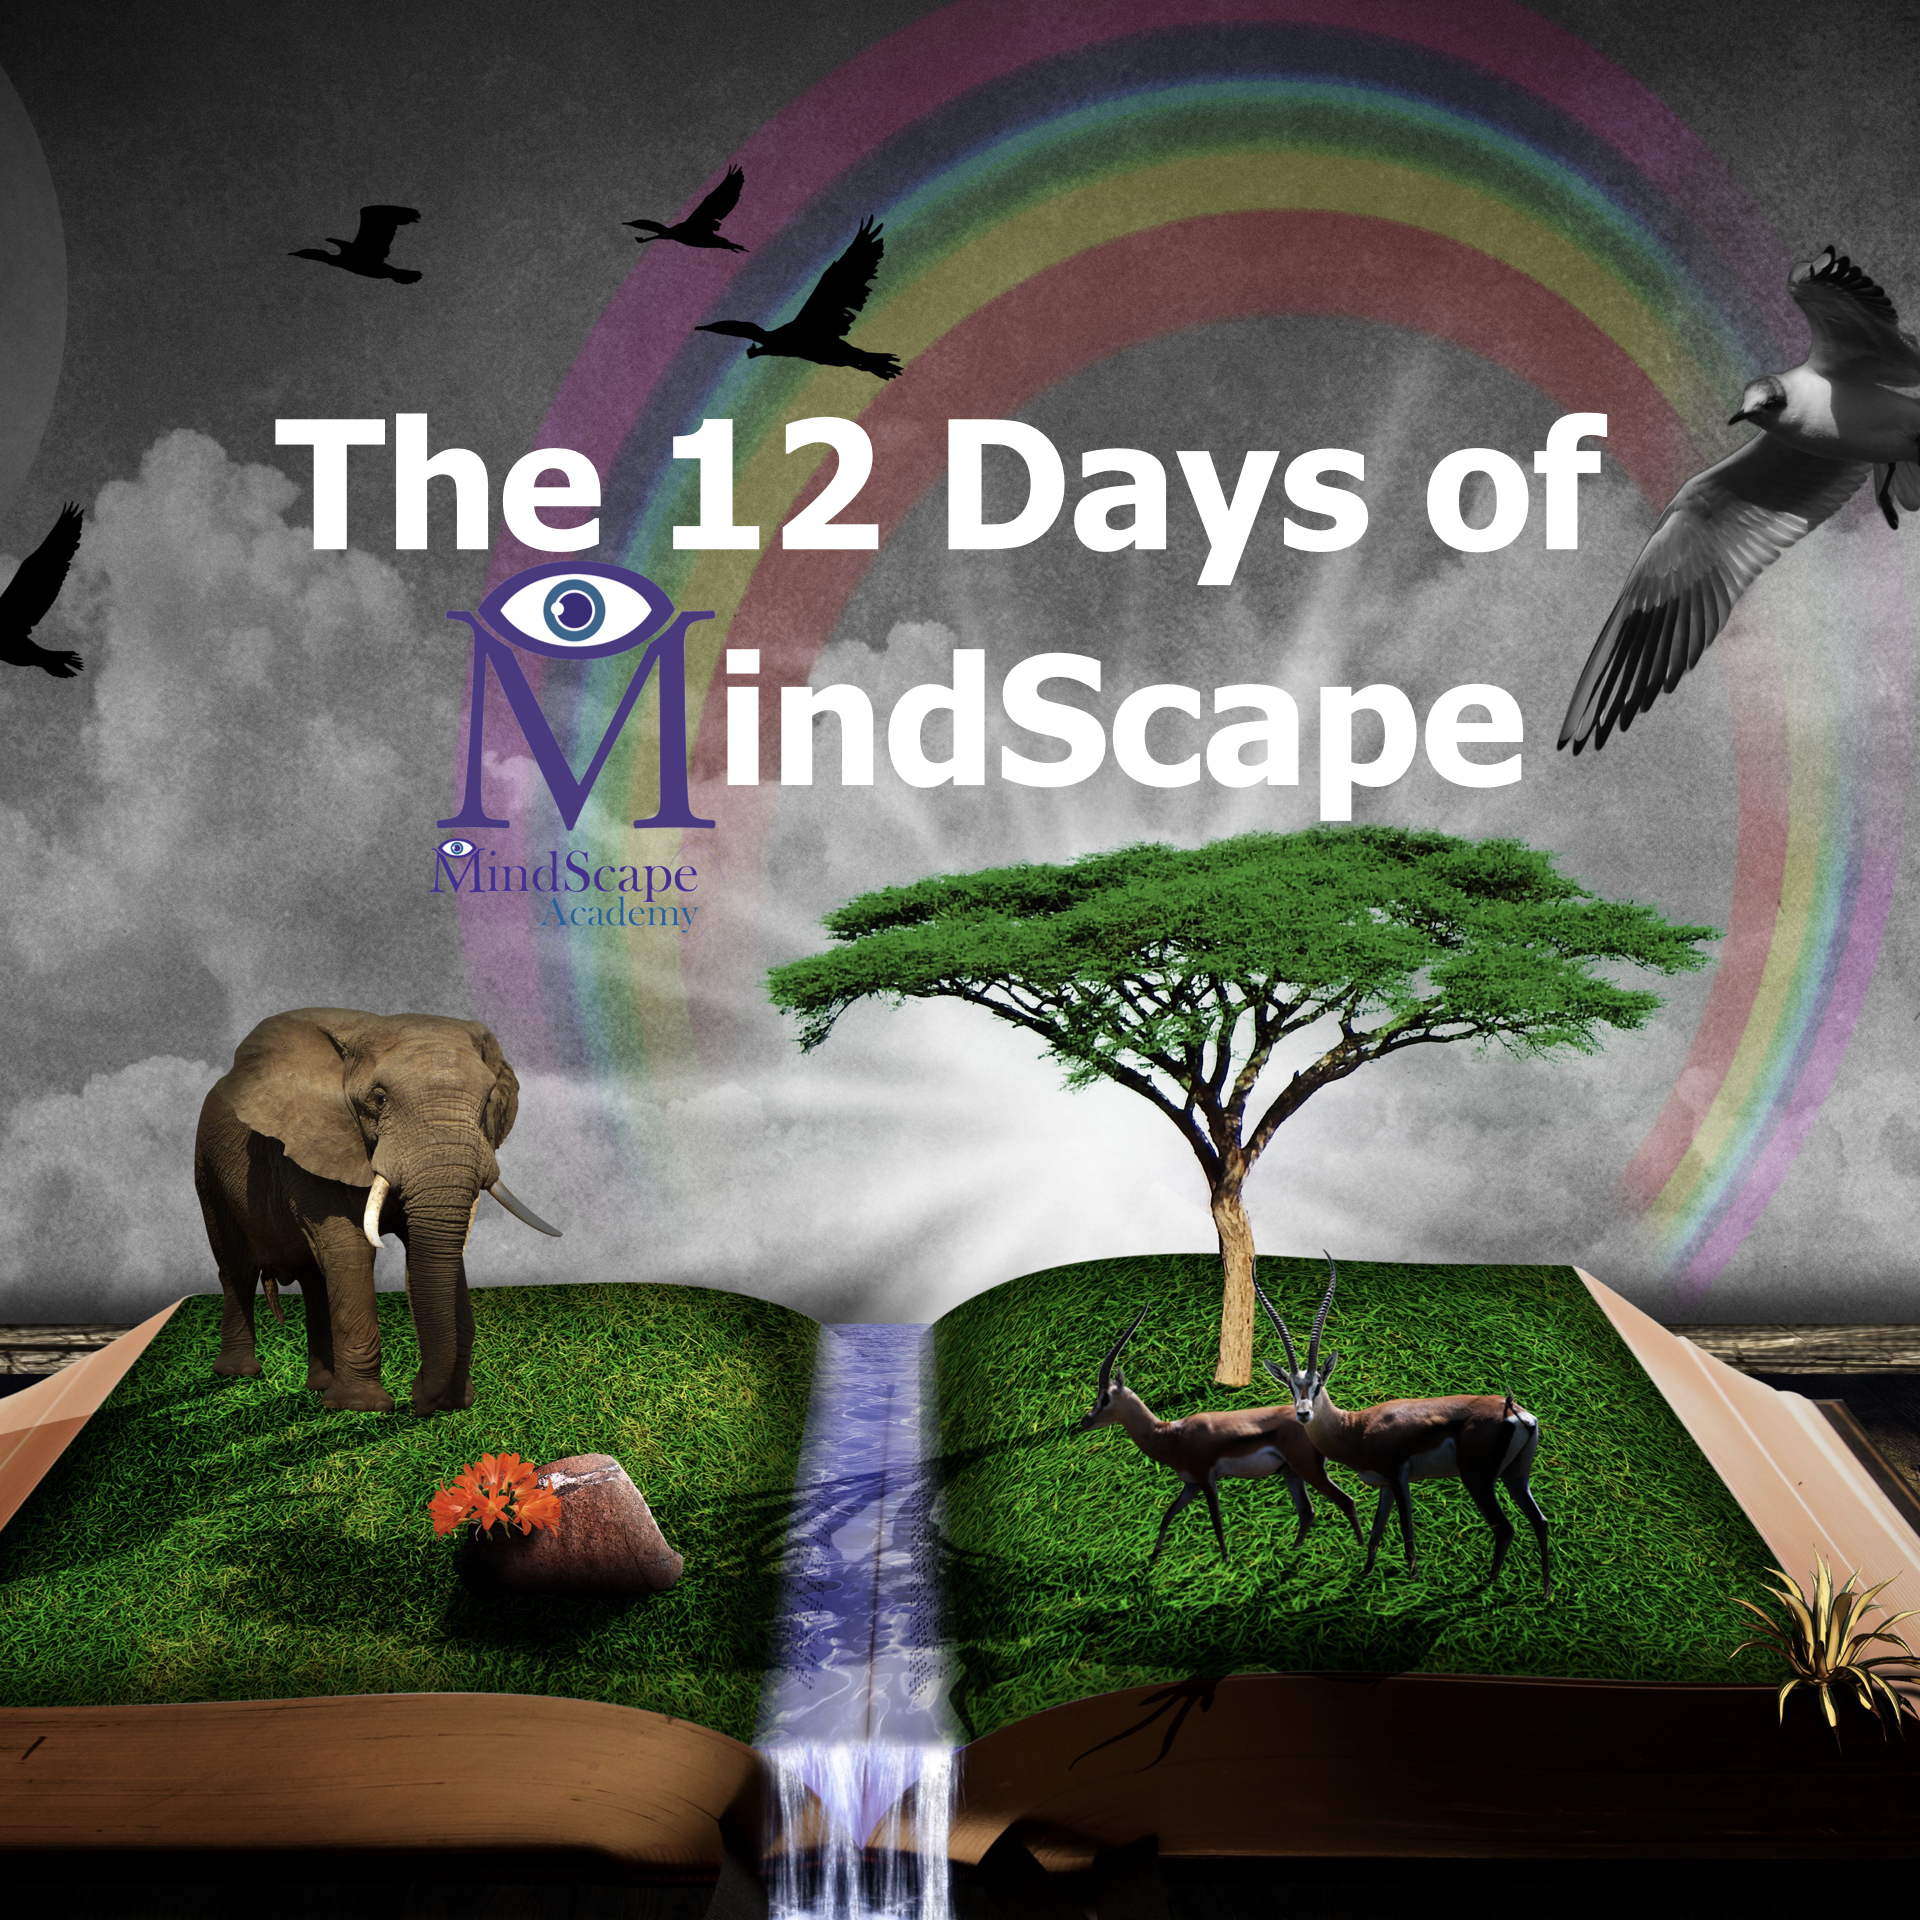 12 Days of MindScape online seminar